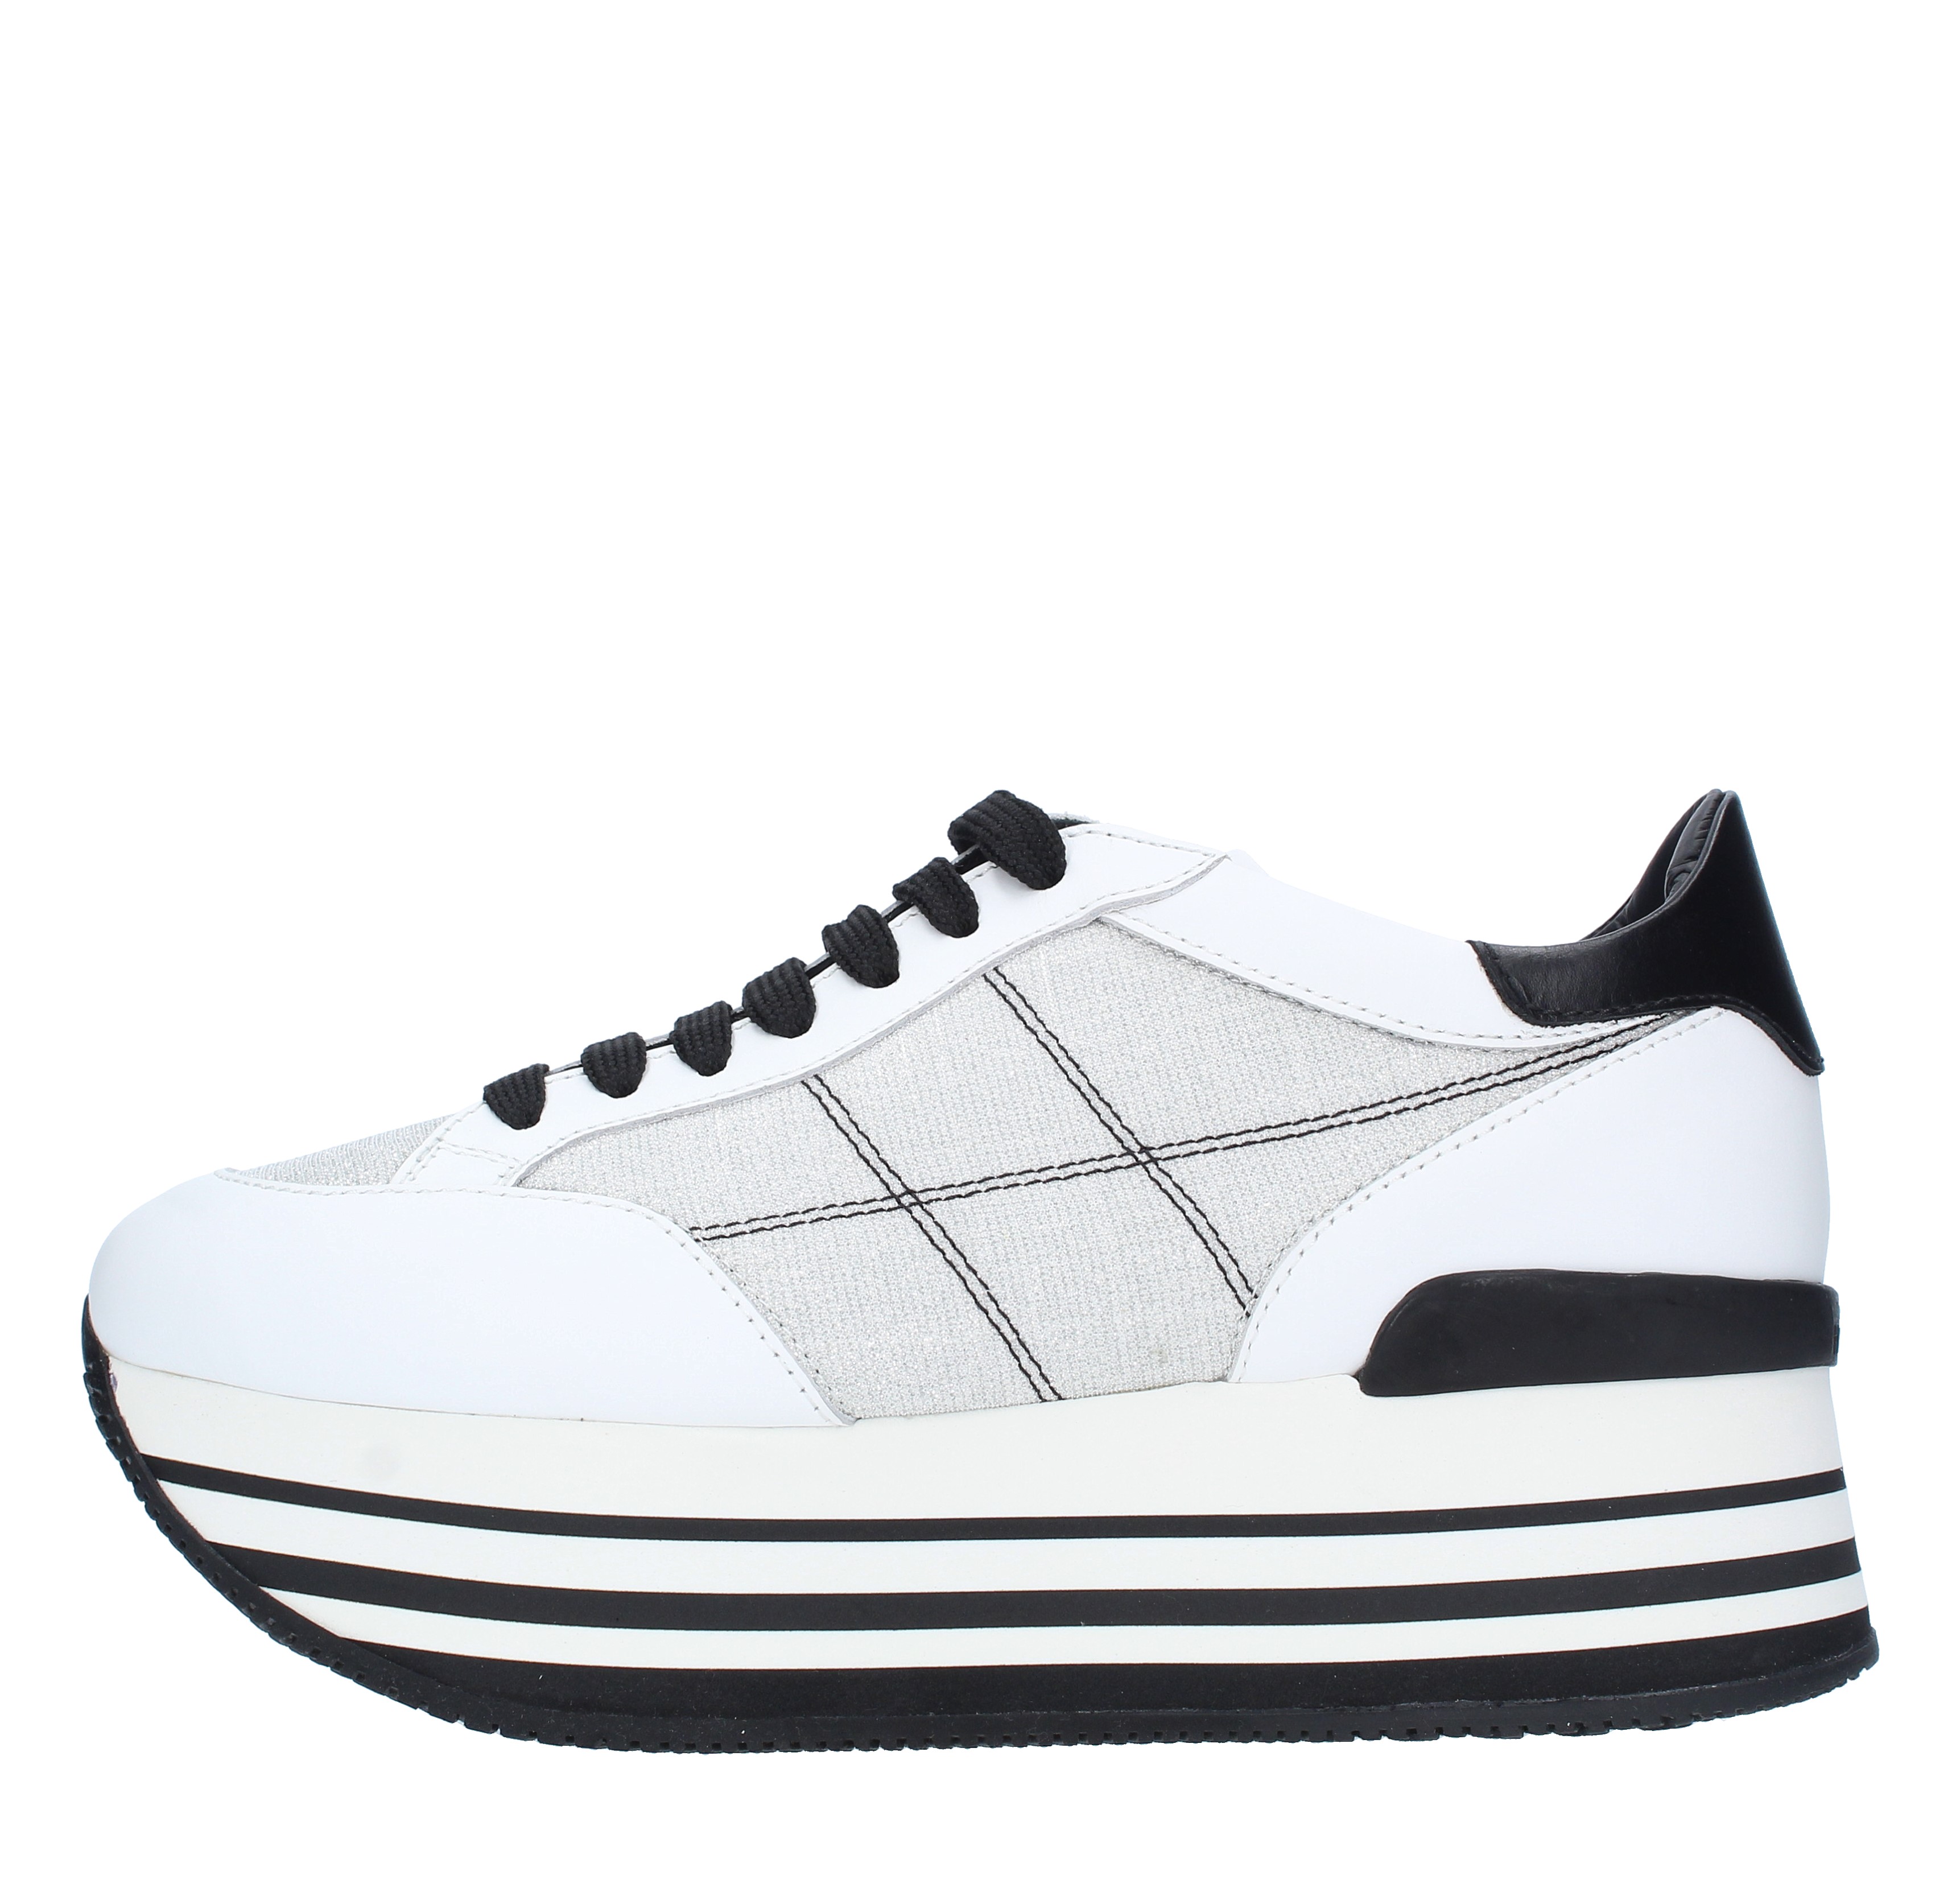 Sneakers Maxi222h in pelle e tessuto - HOGAN - Ginevra calzature